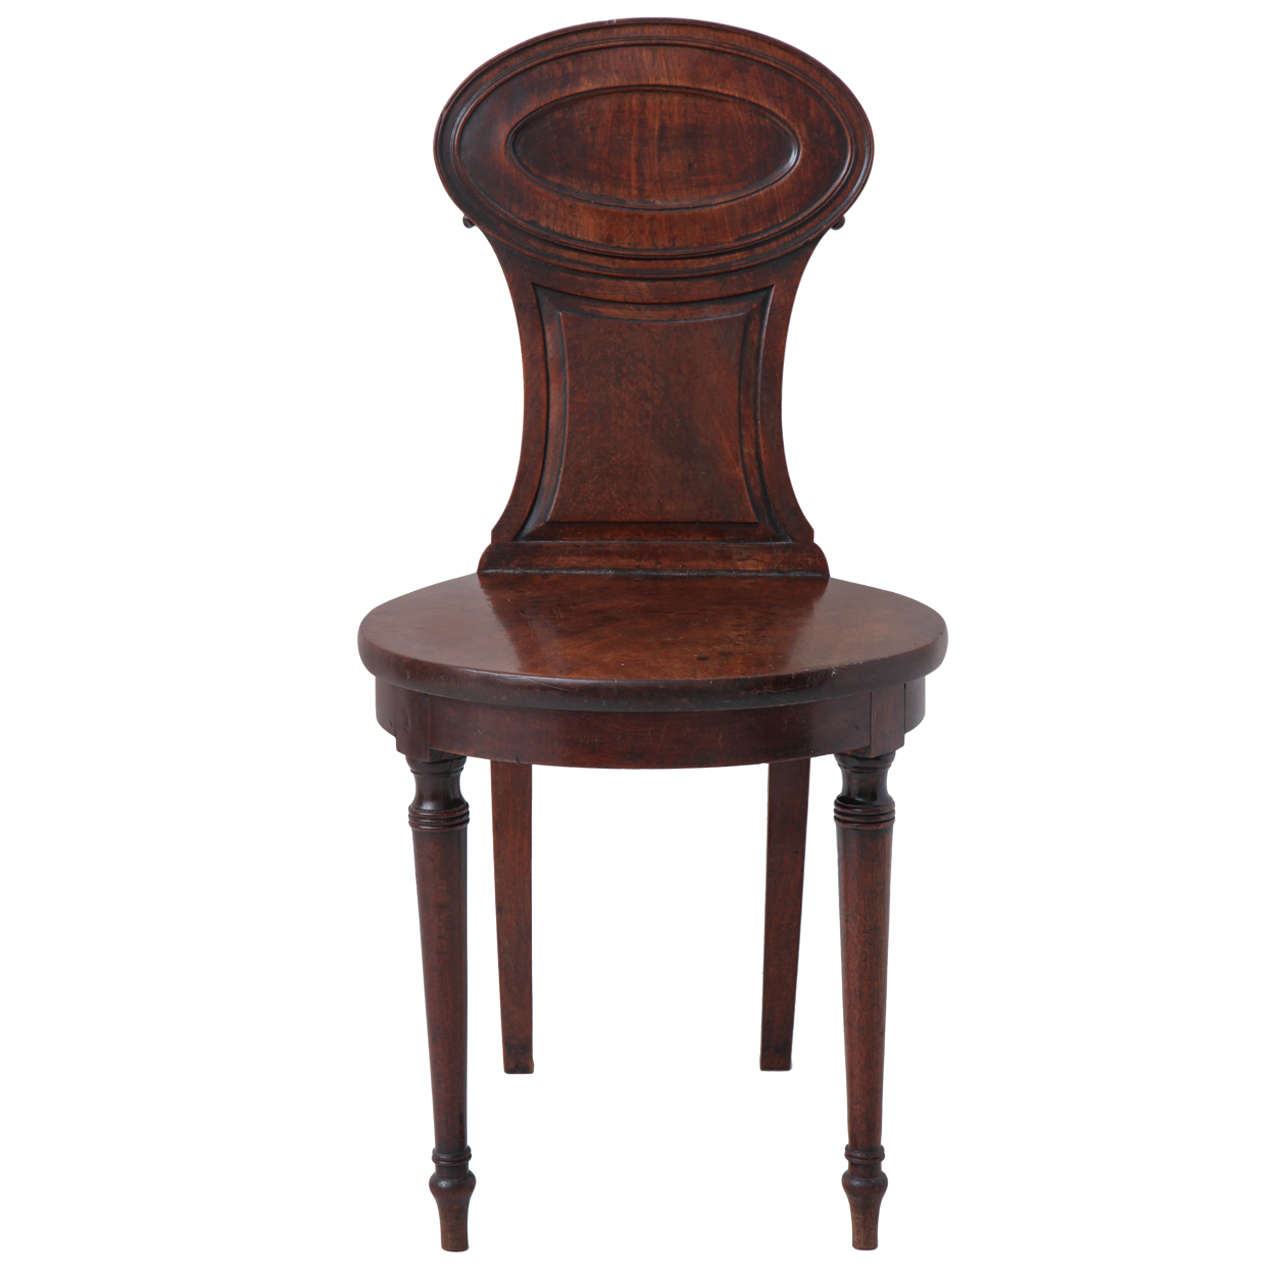 A 19th century English Regency mahogany hall chair